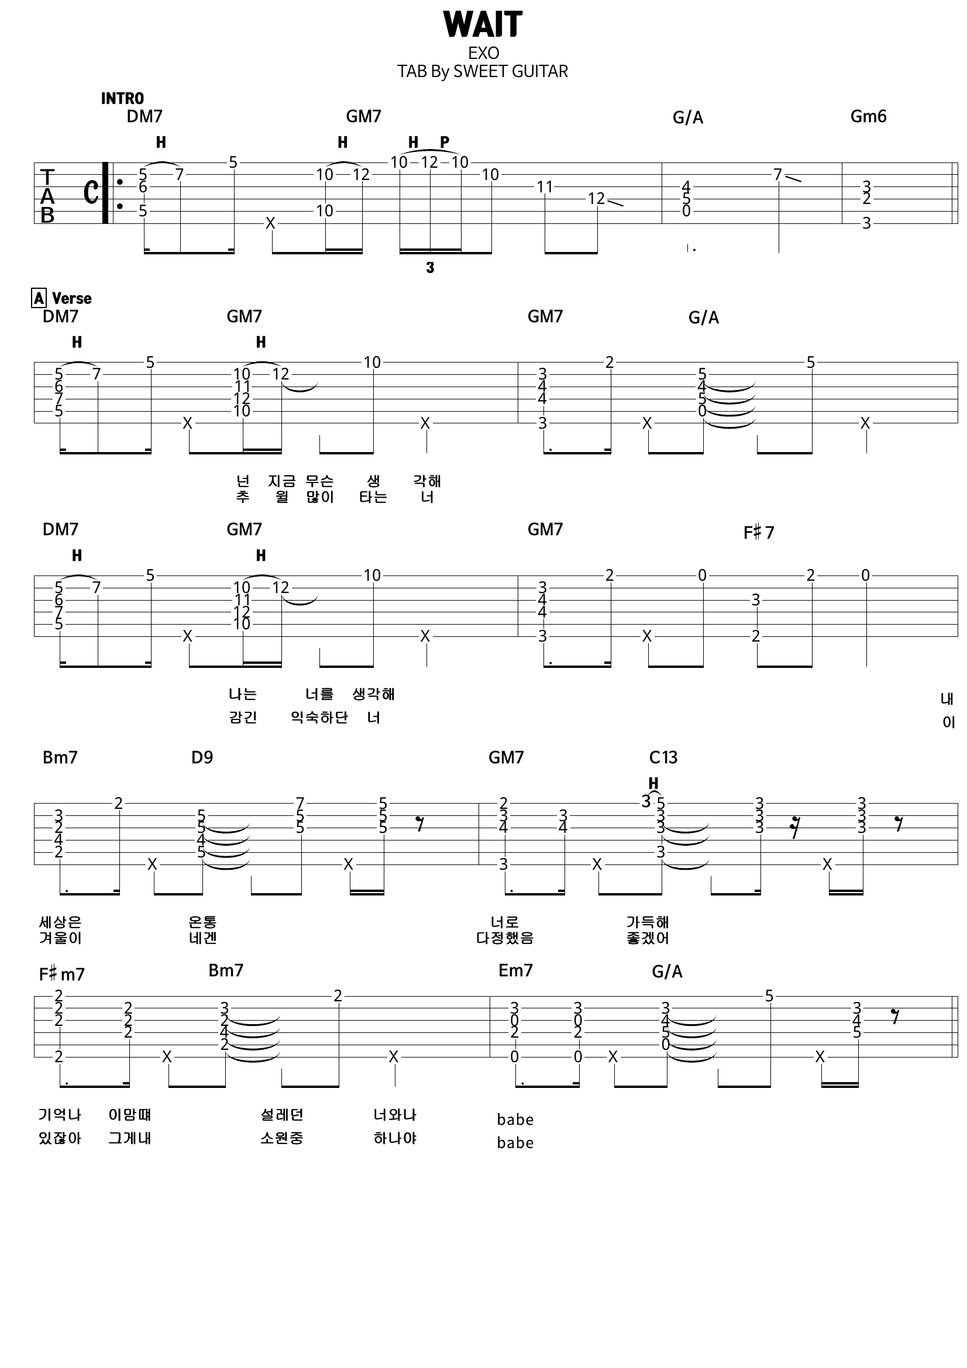 Exo - Wait Acoustic Guitar Tab, Chords ㅣ엑소 기타 코드타브악보 레슨 Sheets